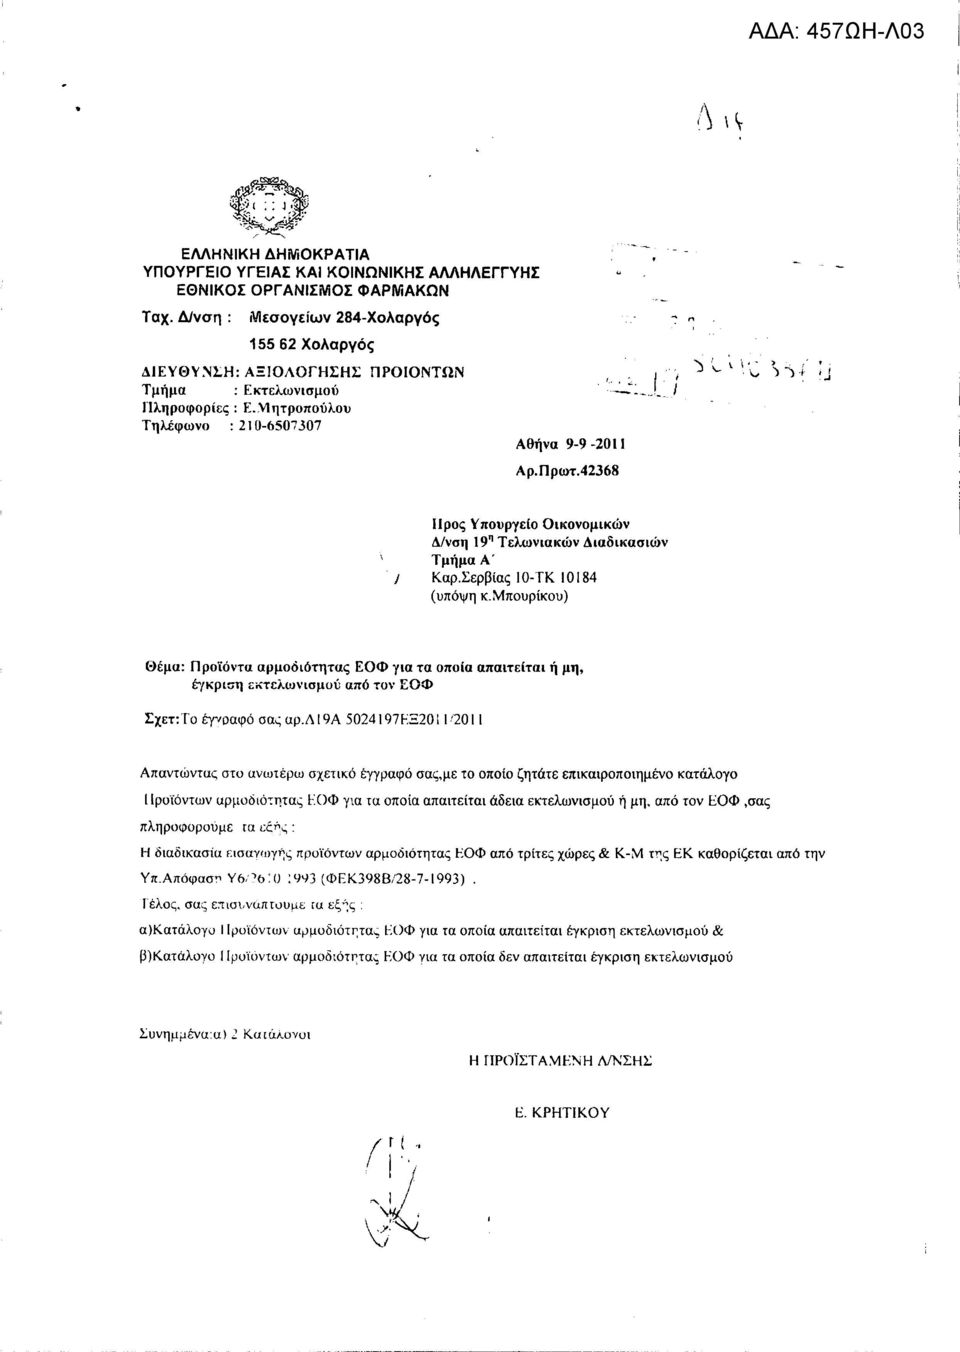 42368 ljρος Υπουργείο Οικονομικών Δ/νση 19 η Τελωνιακών Διαδικασιών ΤμήμαΑ' / Καρ.Σερβίας Ι0- ΤΚ Ι0184 (υπόψη Κ.